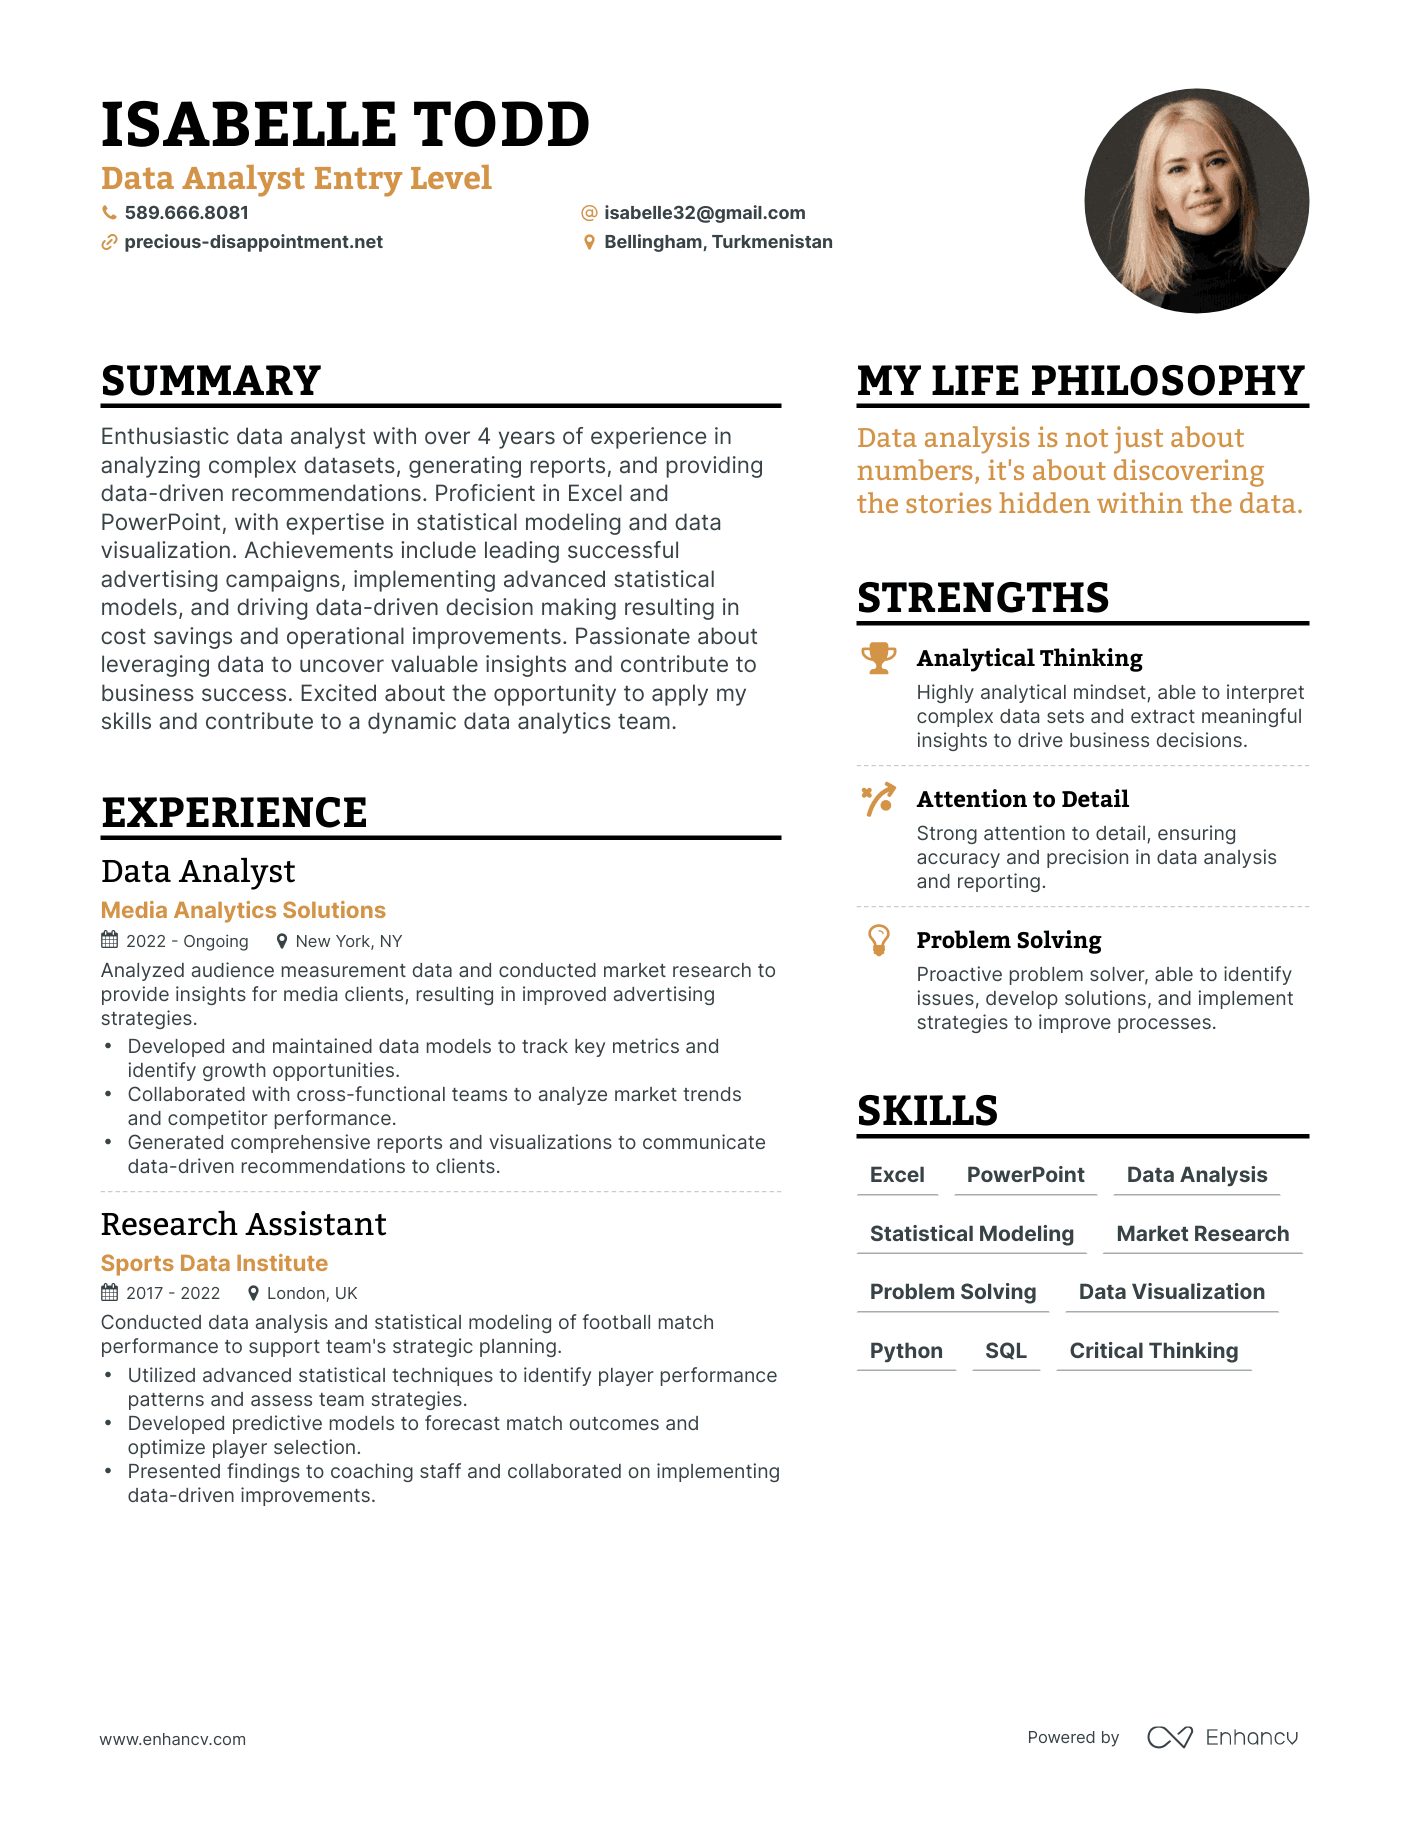 Data Analyst Entry Level resume example